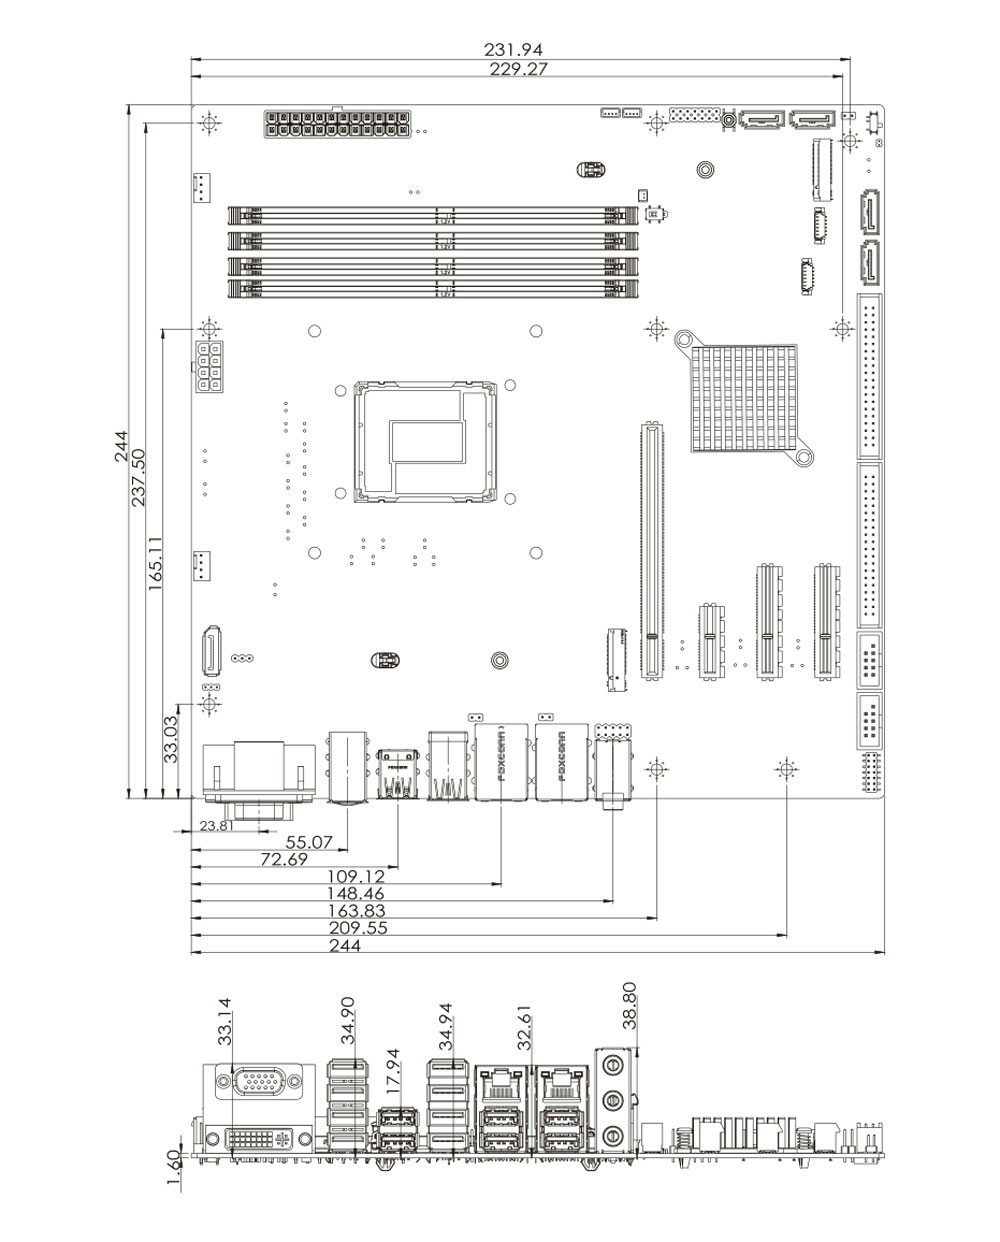 IMB-ADL-Q670-R10 Embedded Board Maße